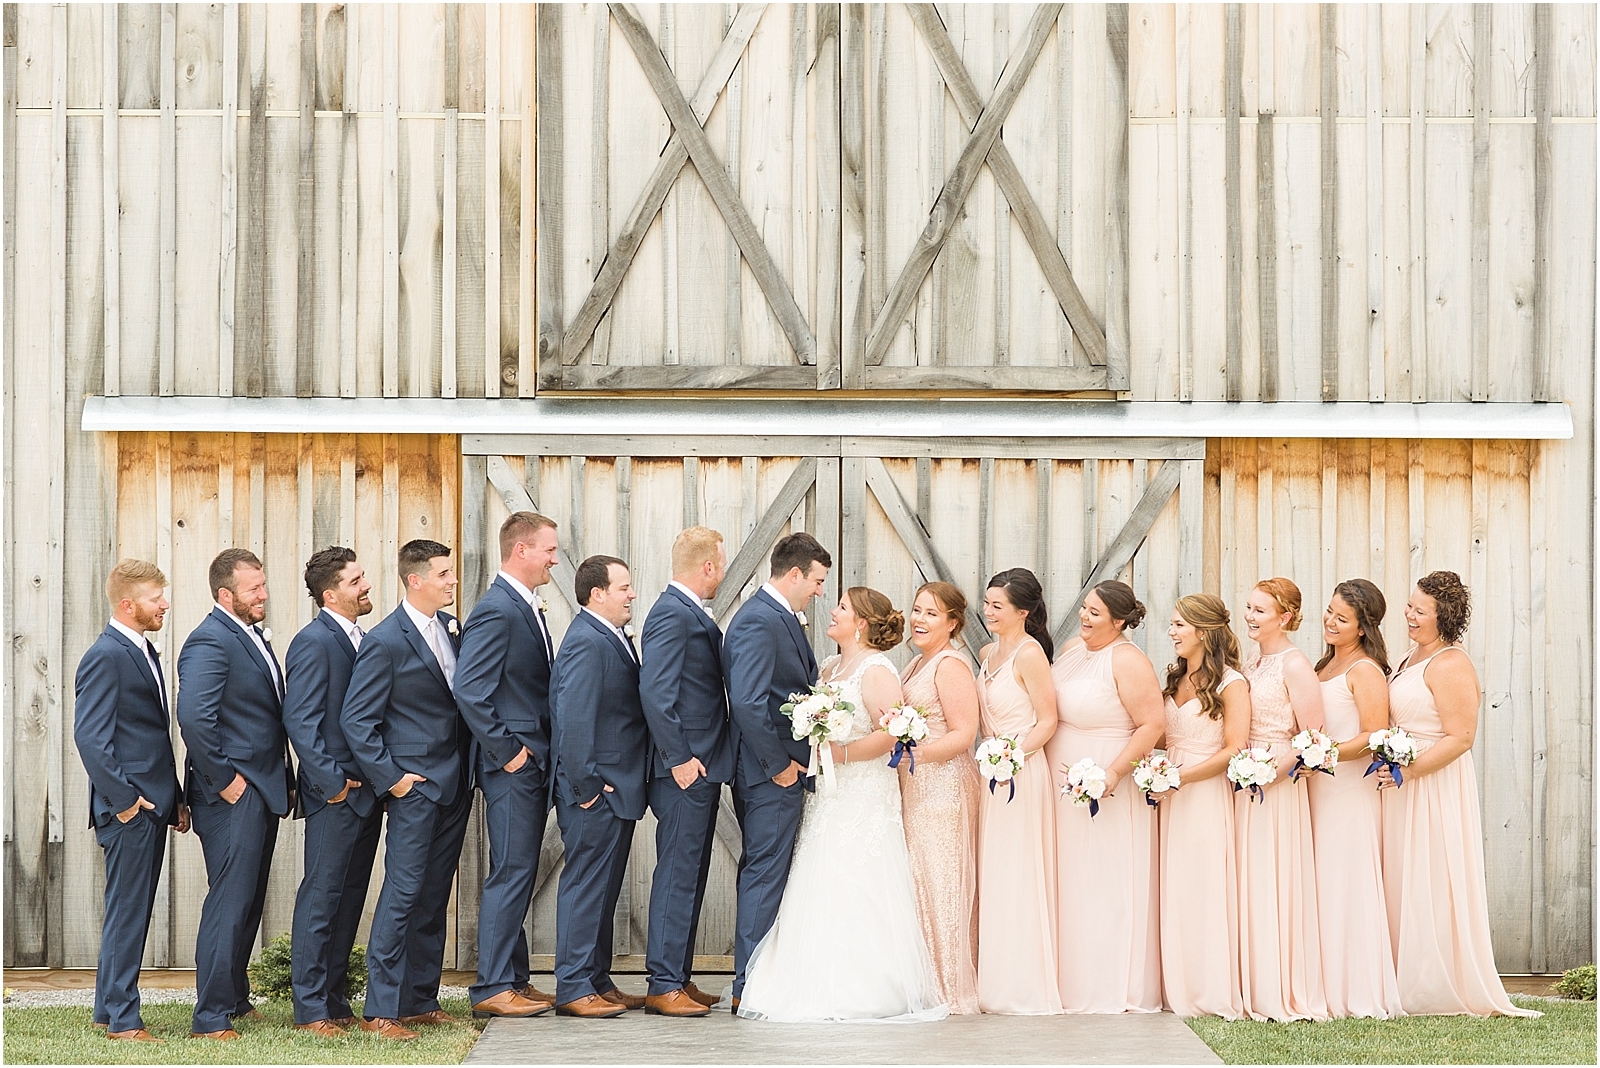 Rachel and Michael | Bret and Brandie Photography | Evansville Wedding Photographers 0056.jpg